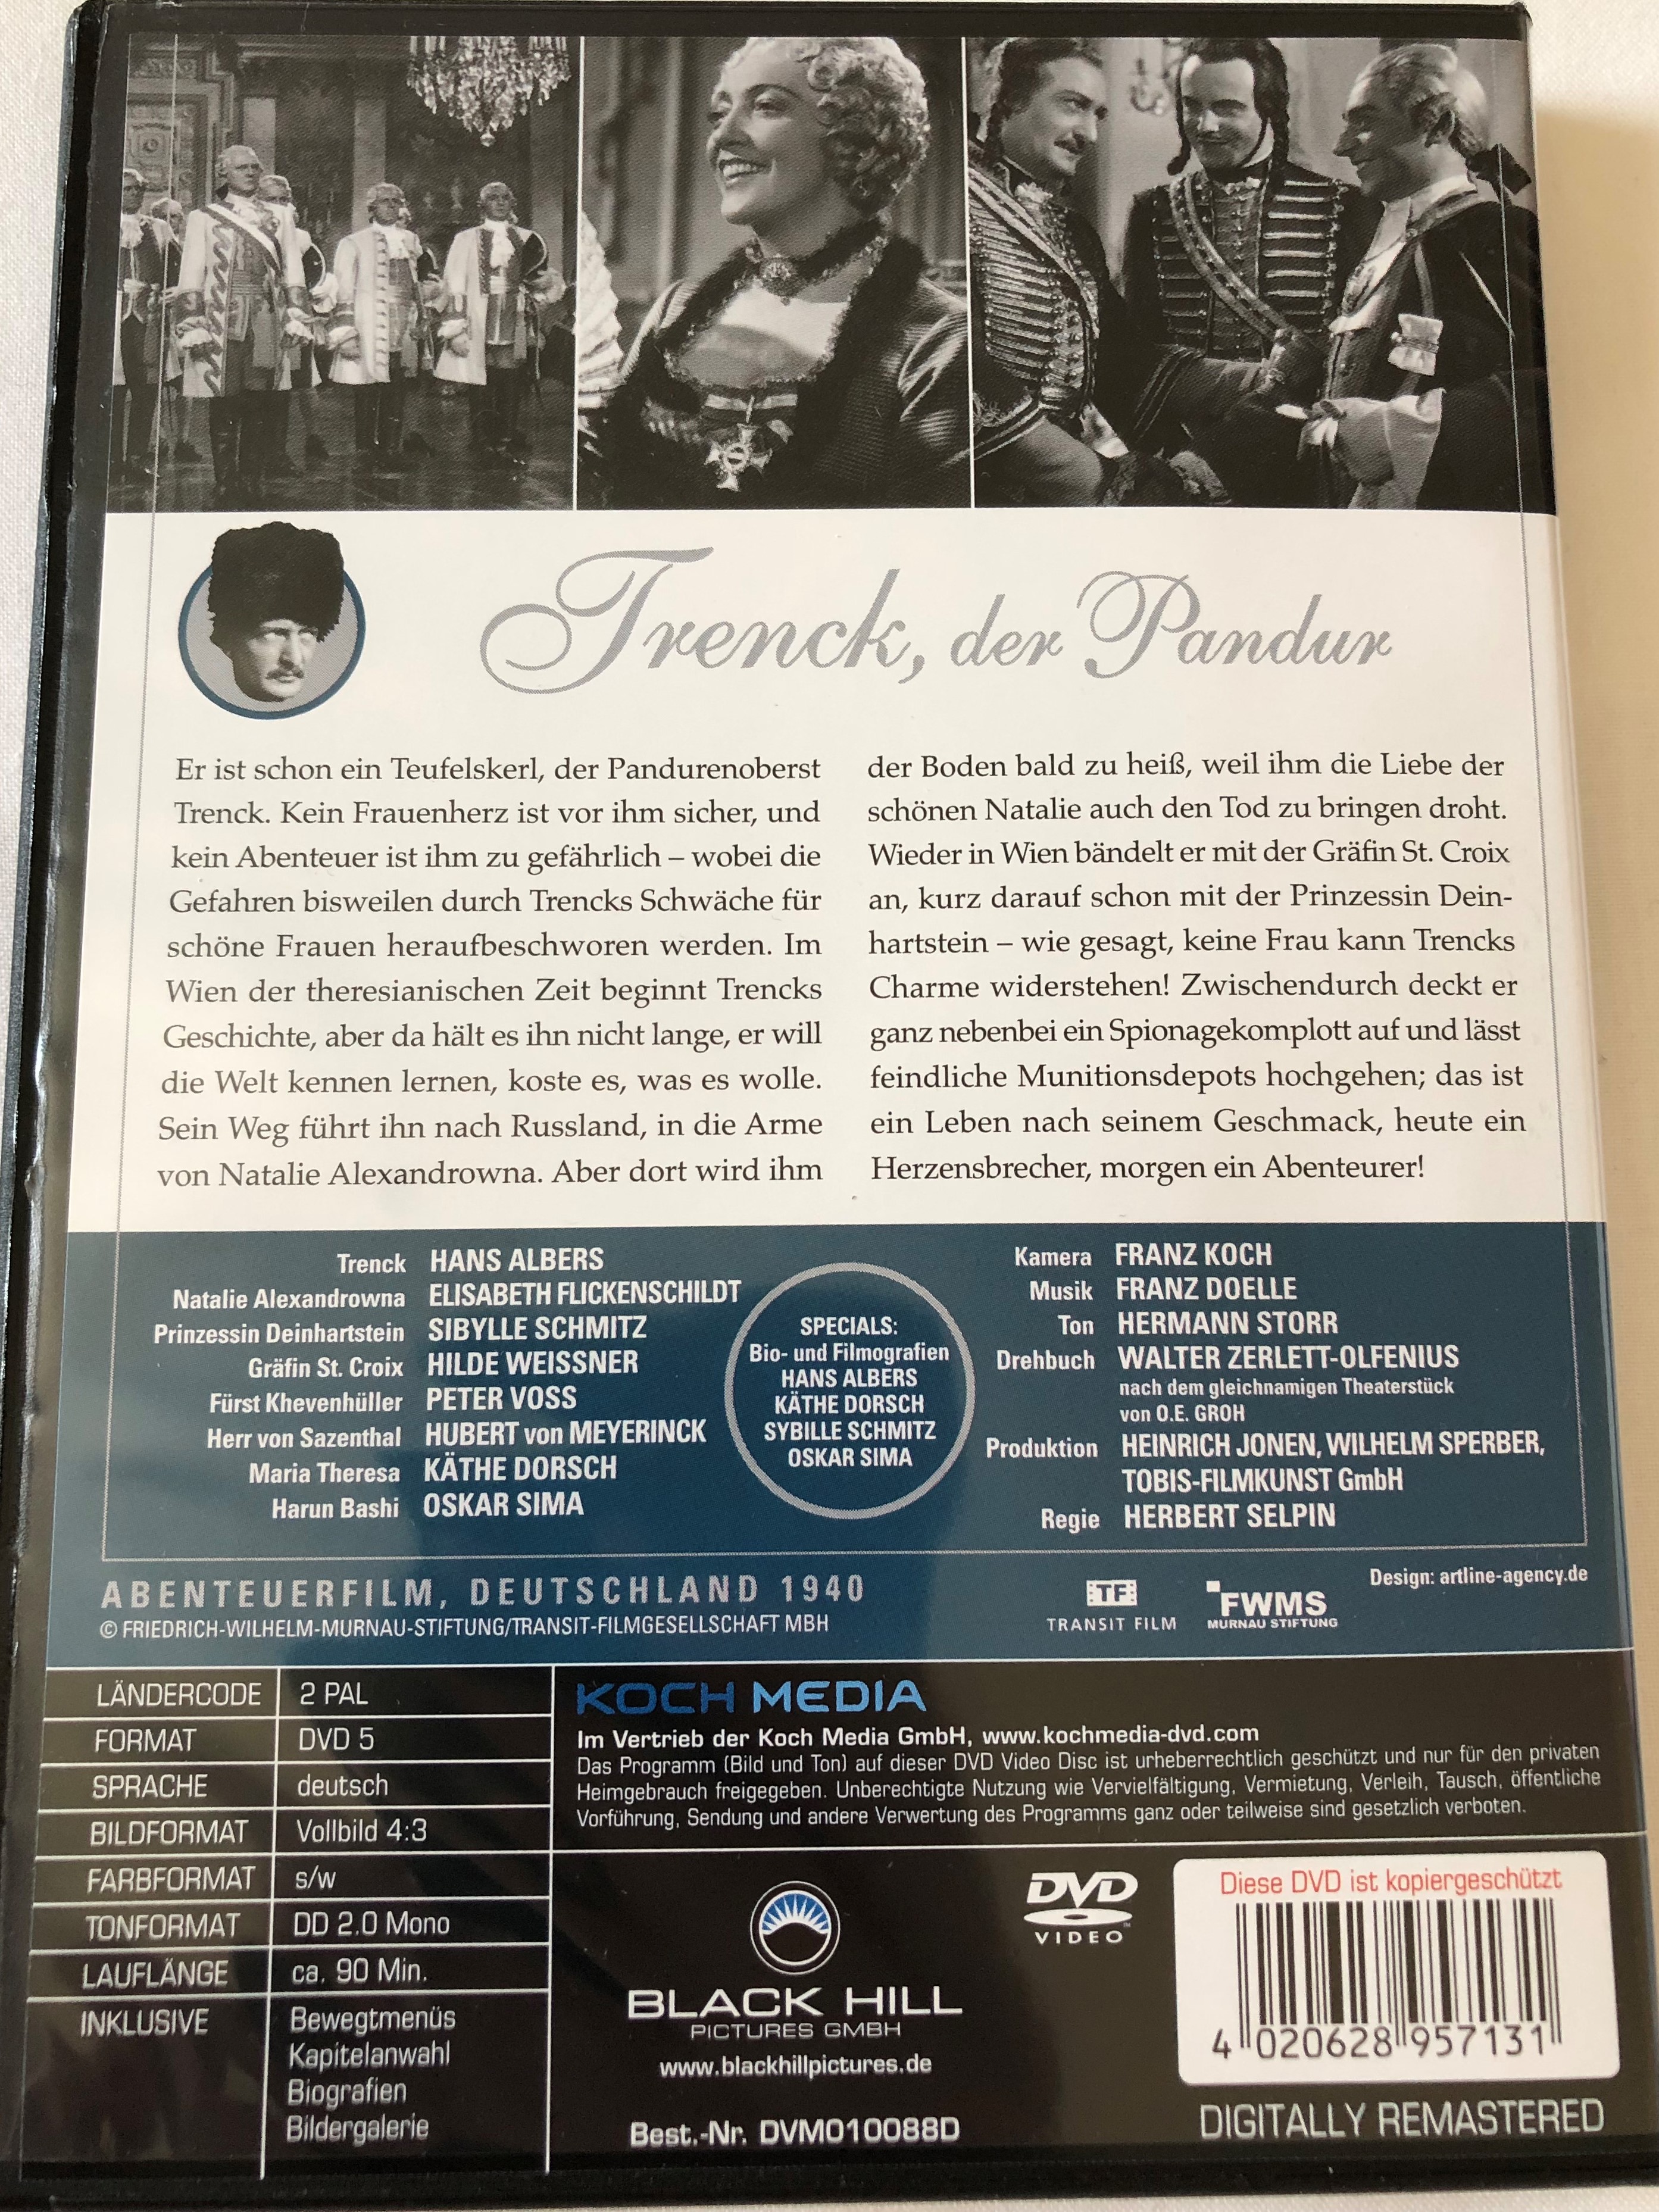 trenck-der-pandur-dvd-1940-directed-by-herbert-selpin-starring-hans-albers-elisabeth-flickenschildt-sybille-schmitz-digitally-remastered-deutsche-filmklassiker-2-.jpg